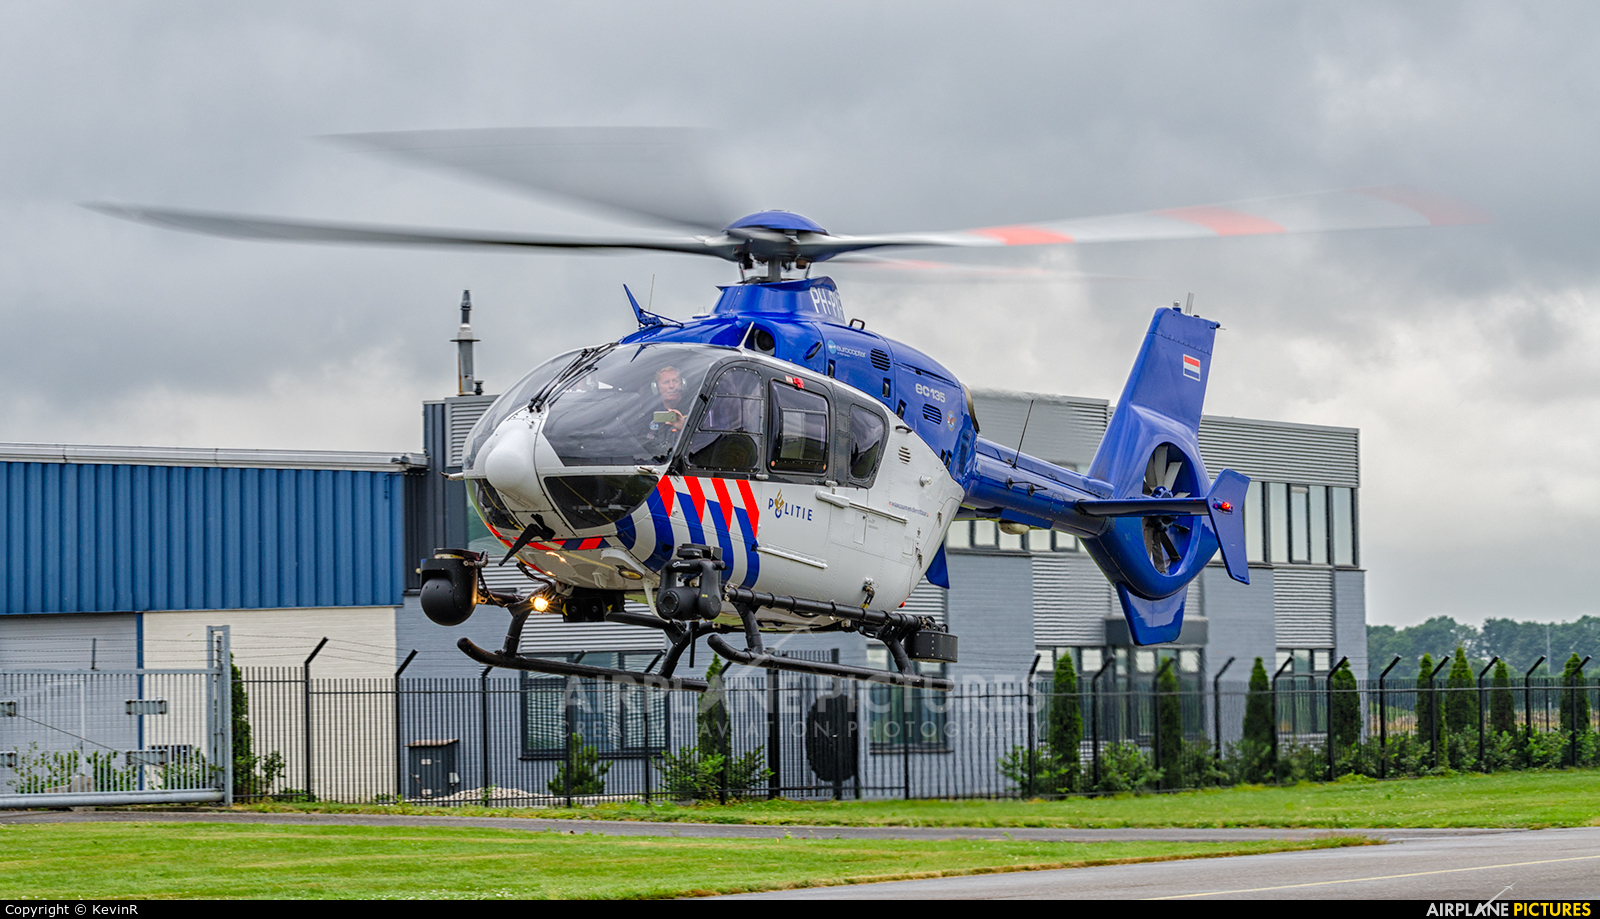 KLPD Korps Landelijke Politie Diensten  PH-PXF aircraft at Lelystad